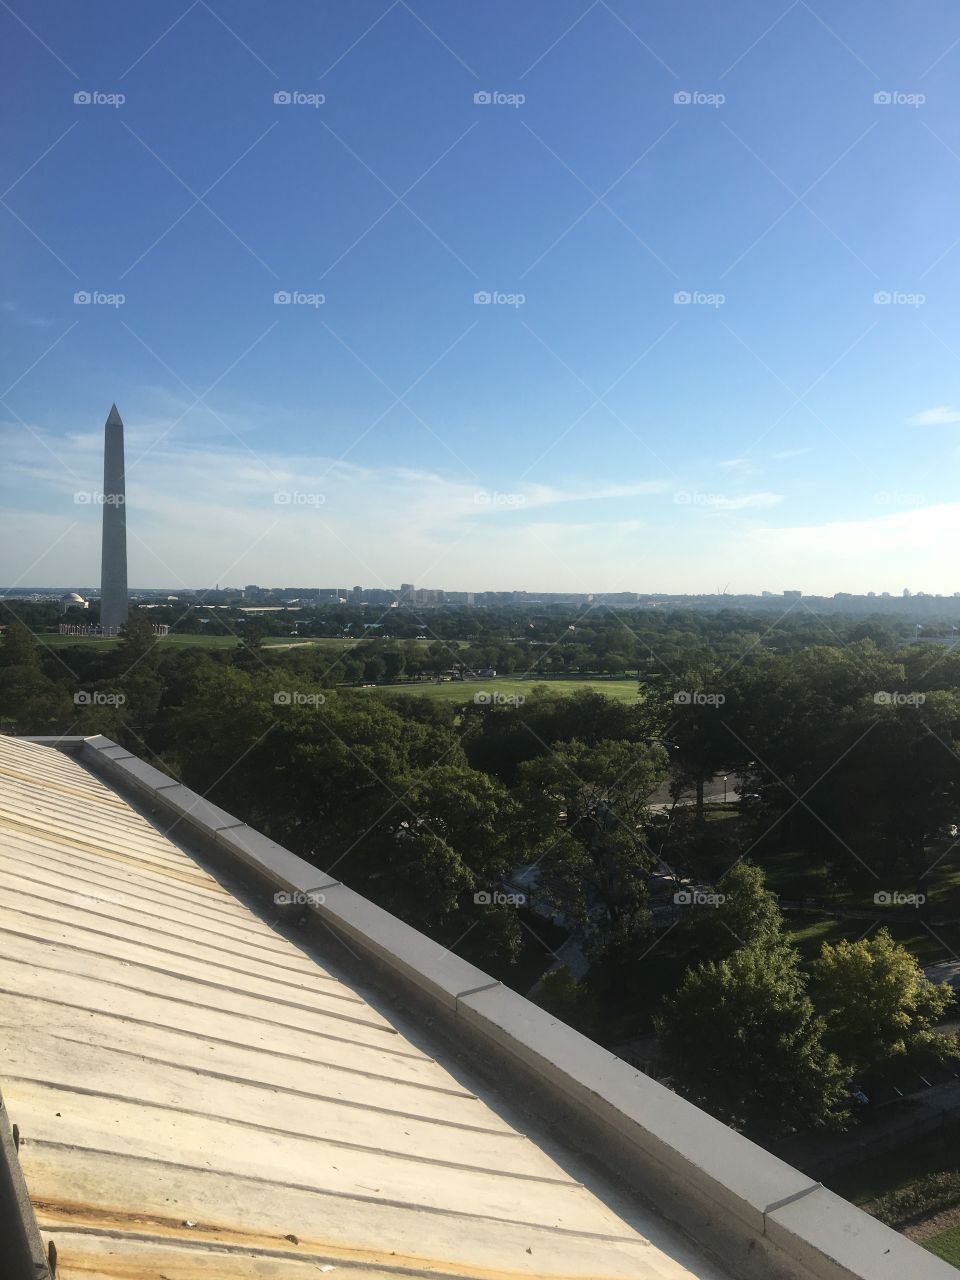 Washington DC in all its glory ❤